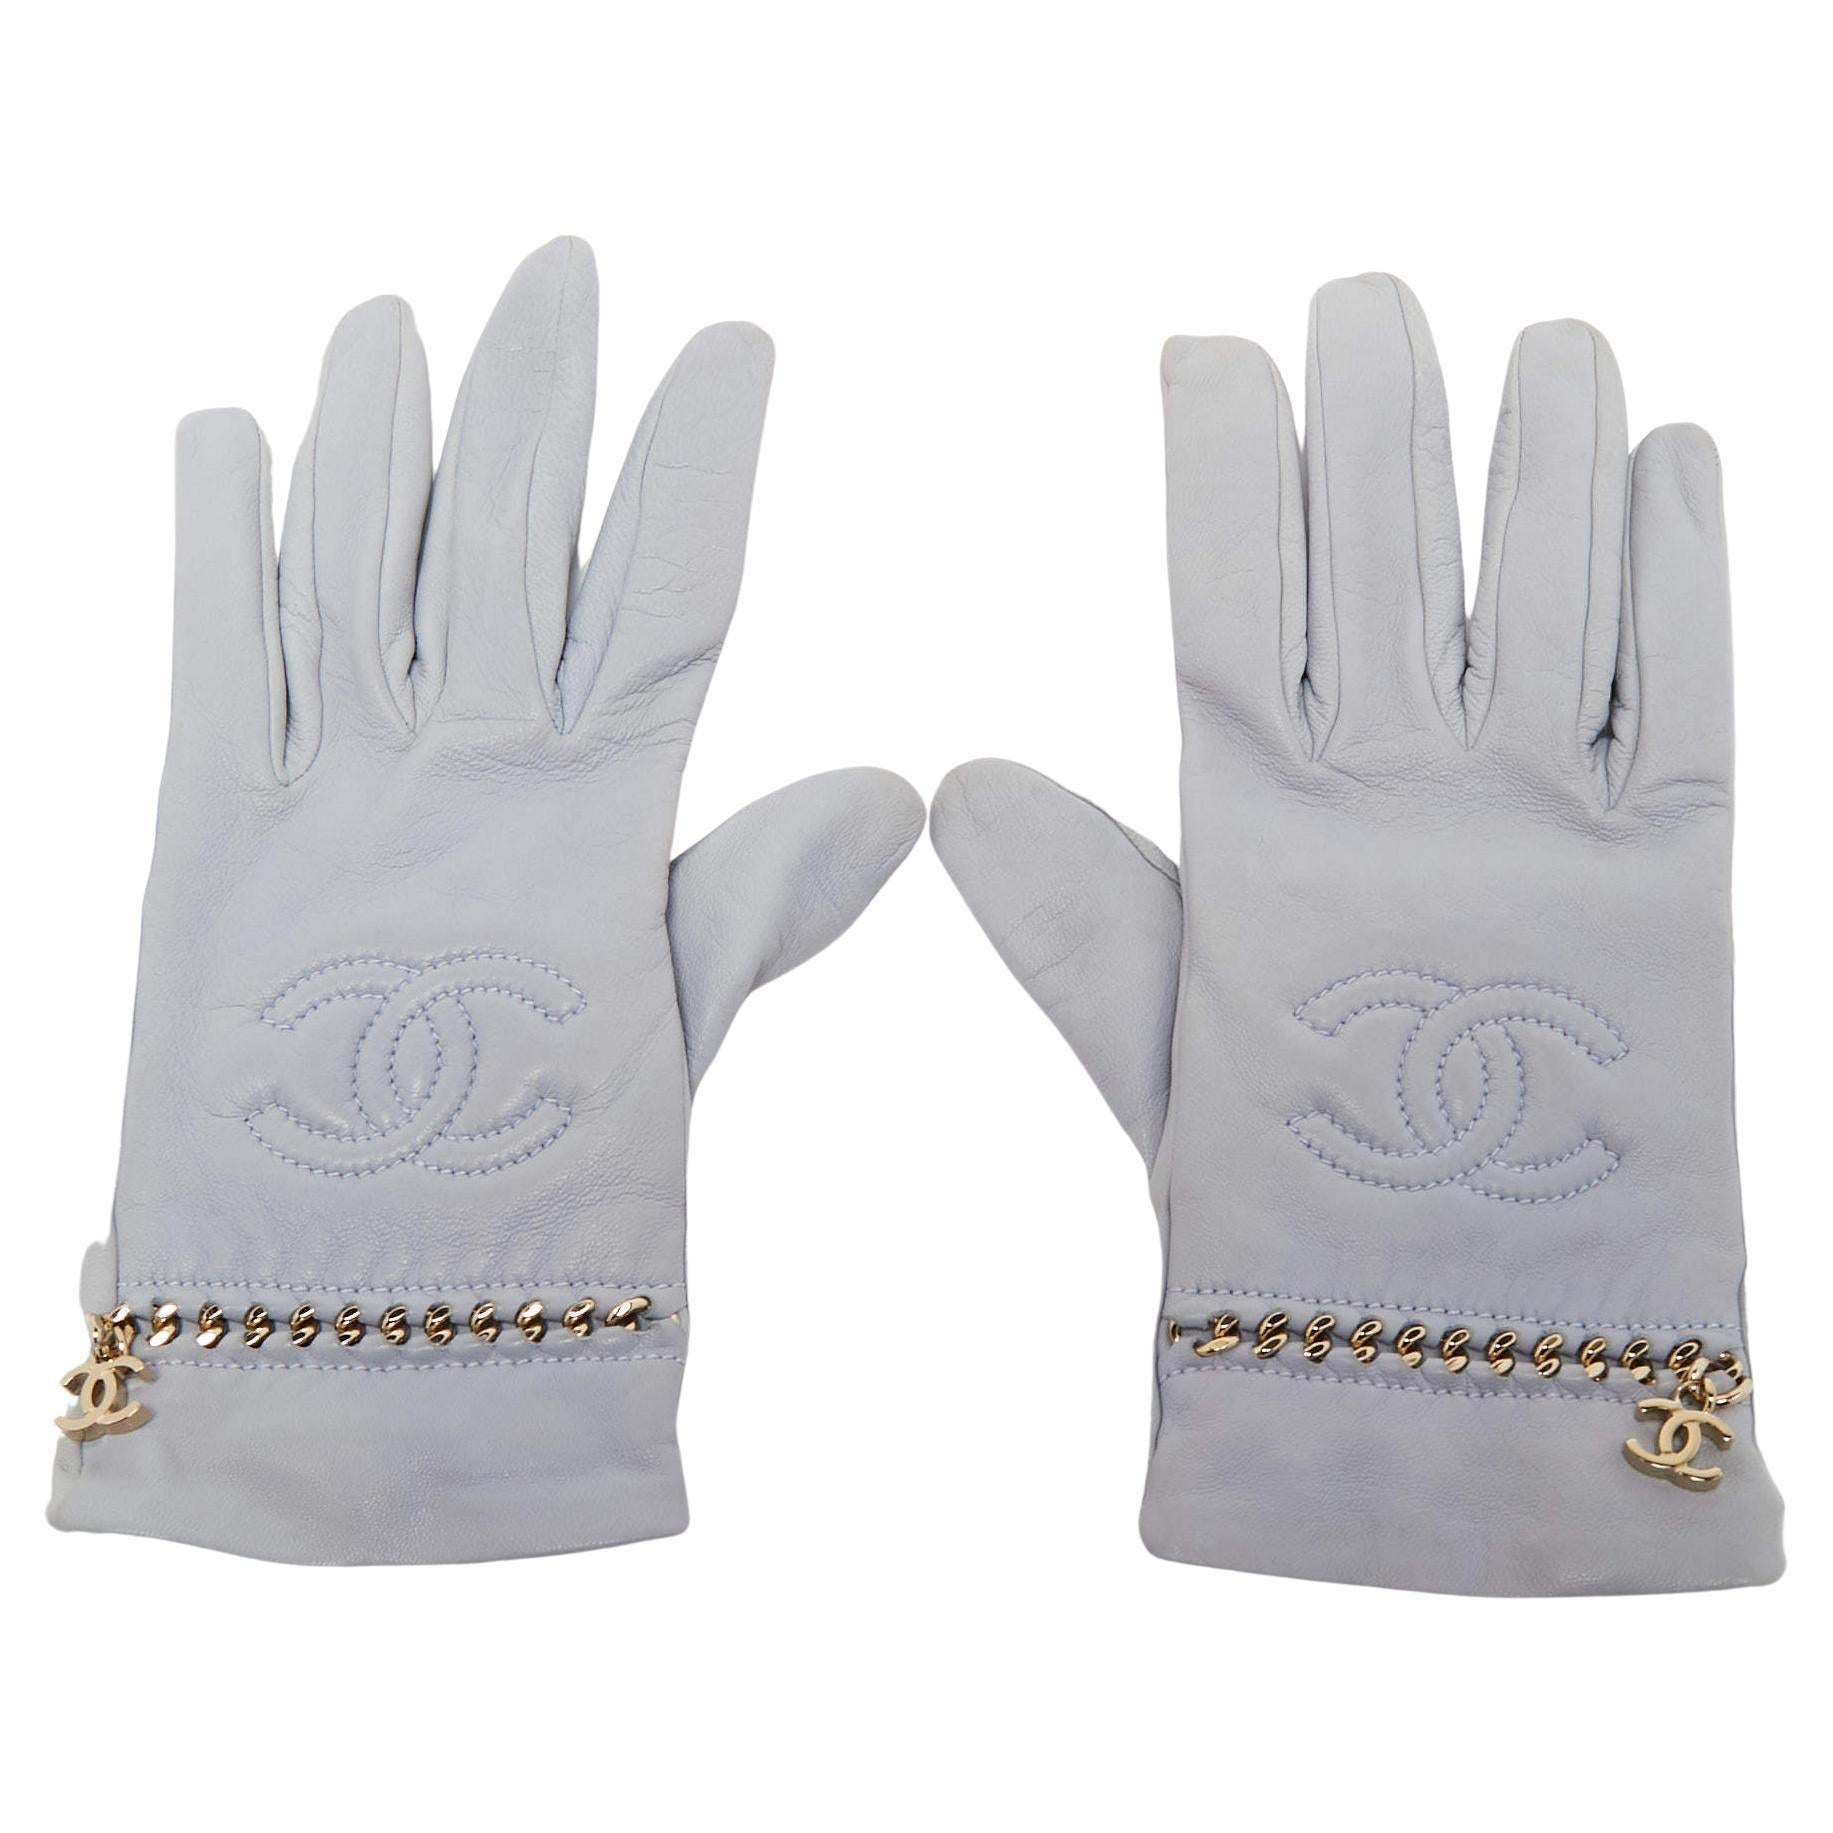 Chanel CC Logo Blue Cashmere Gloves